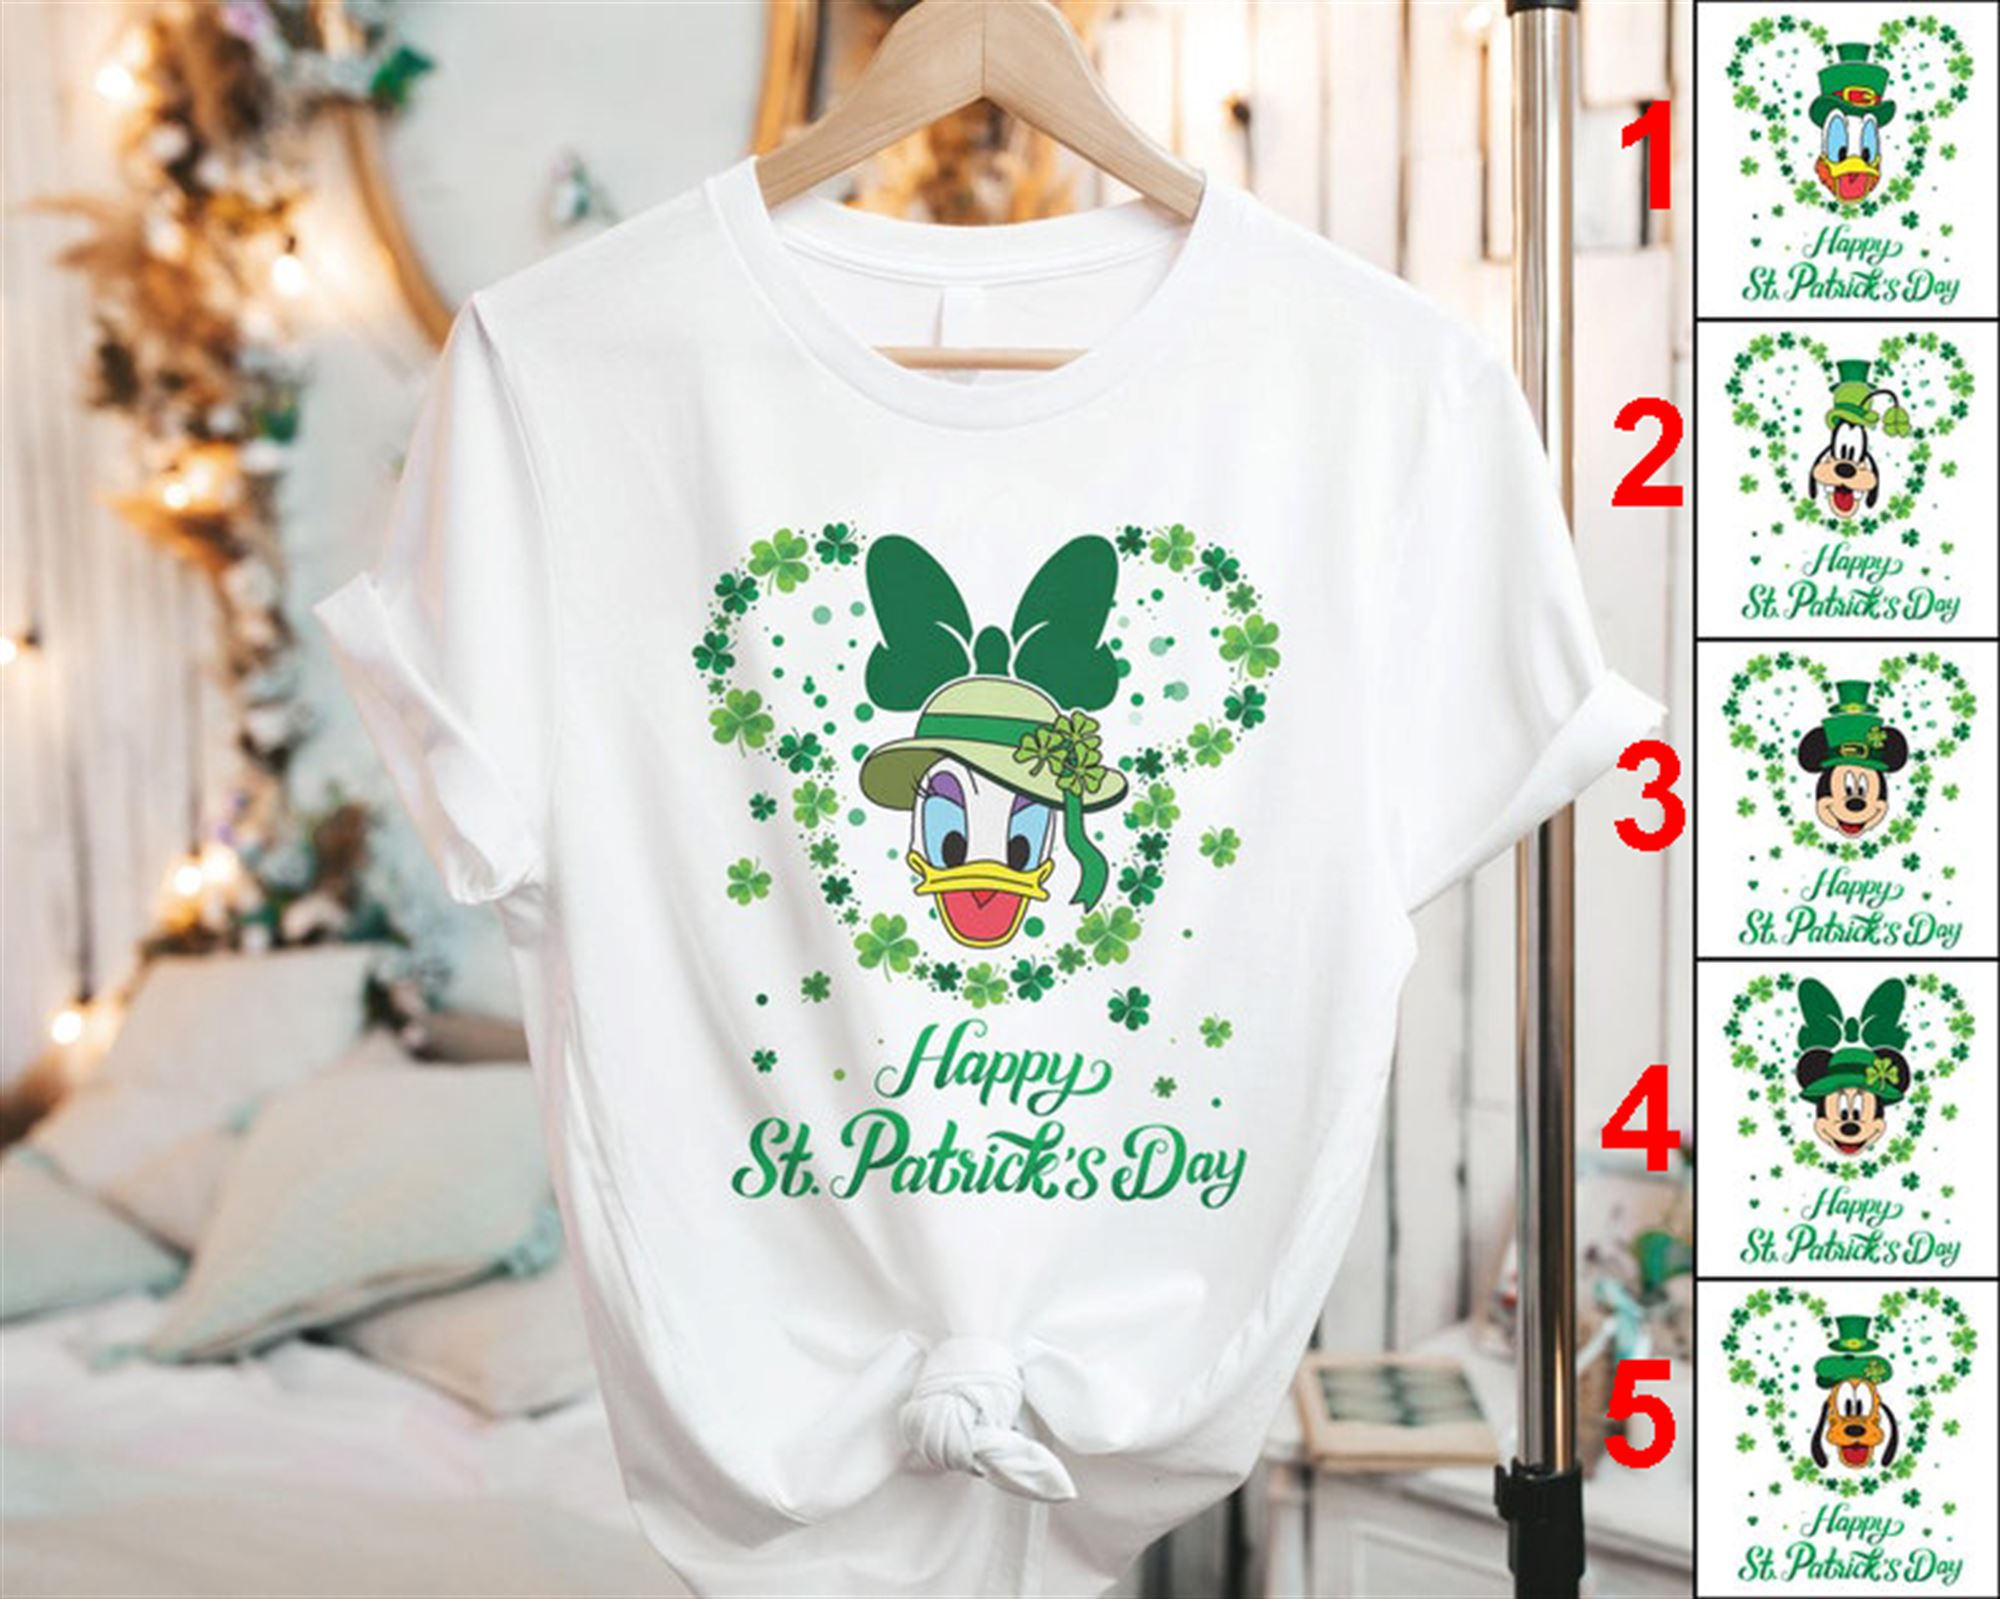 Happy St Patrick's Day Disney Trip With Household Tees Customized St Patrick's Day Disney Household Tee 